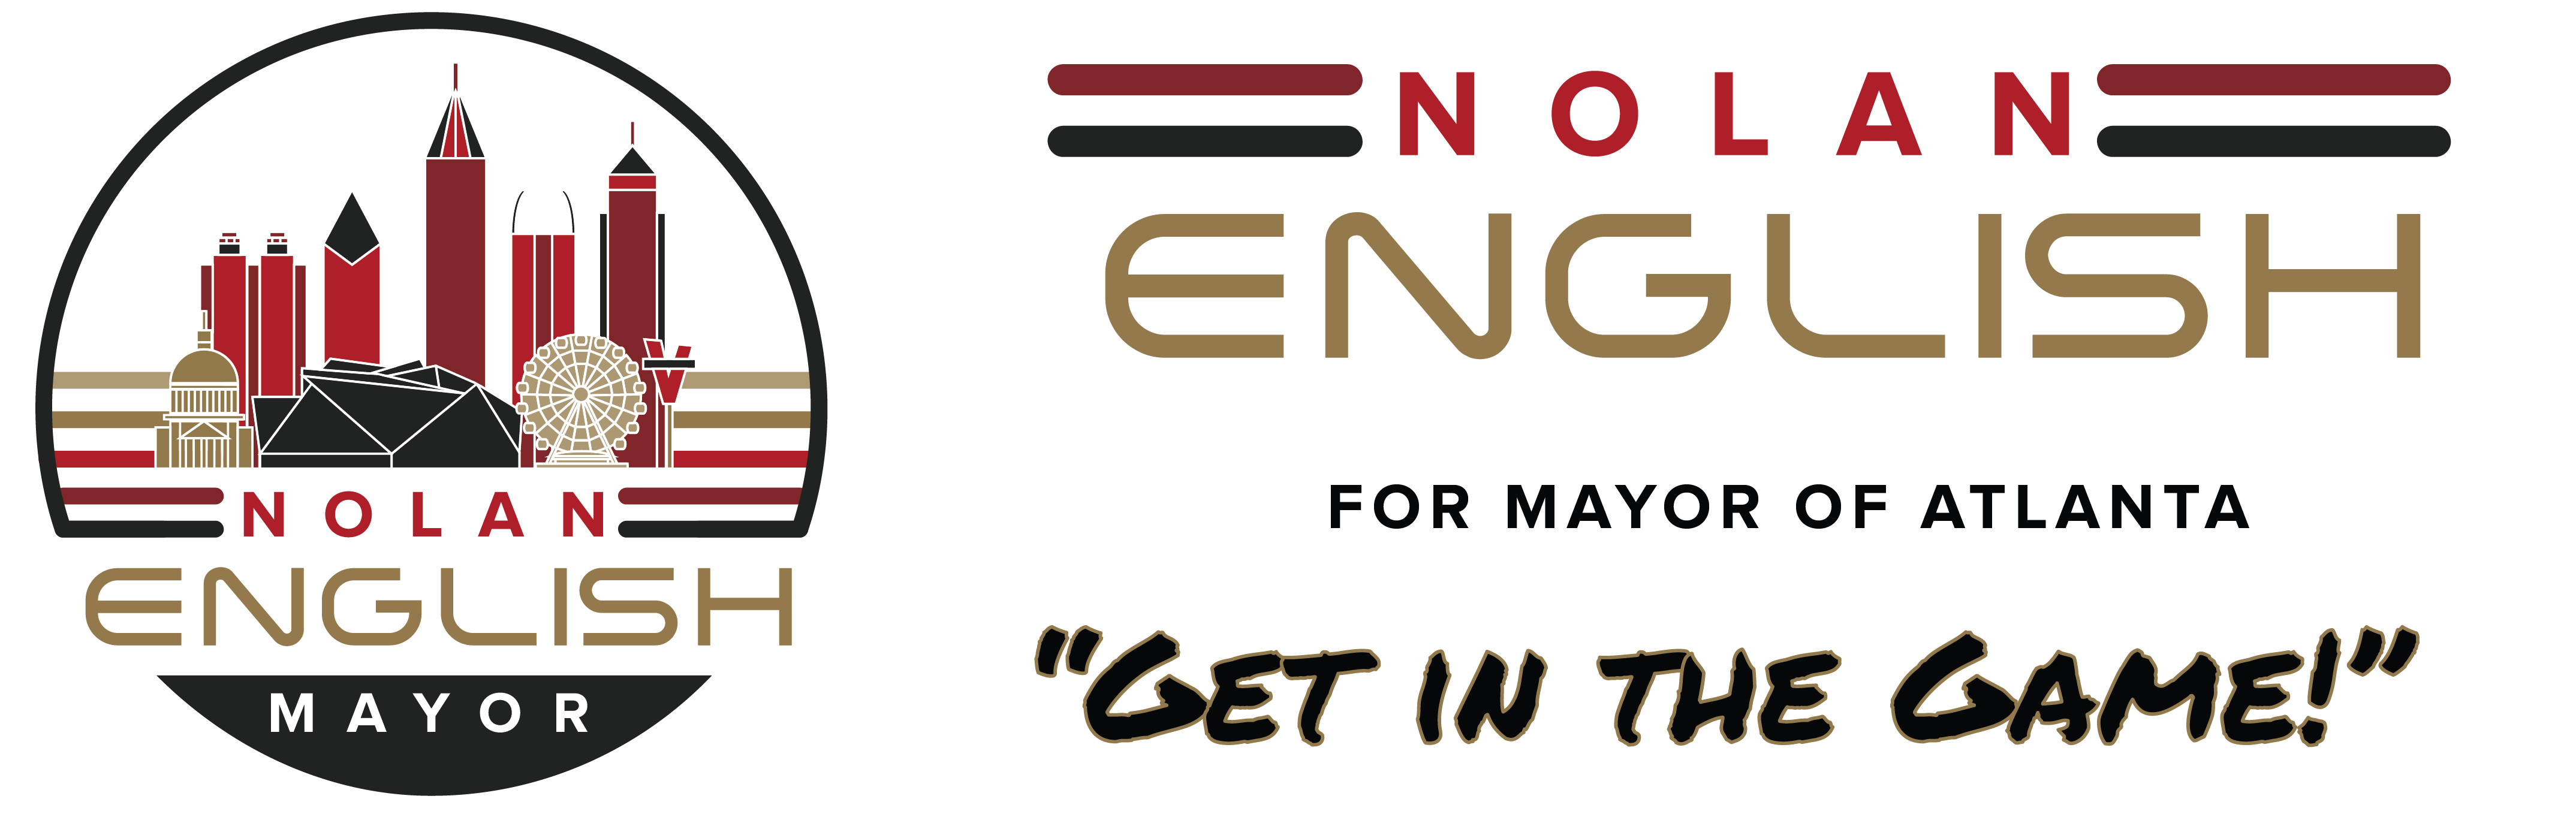 Nolan English for Mayor logo